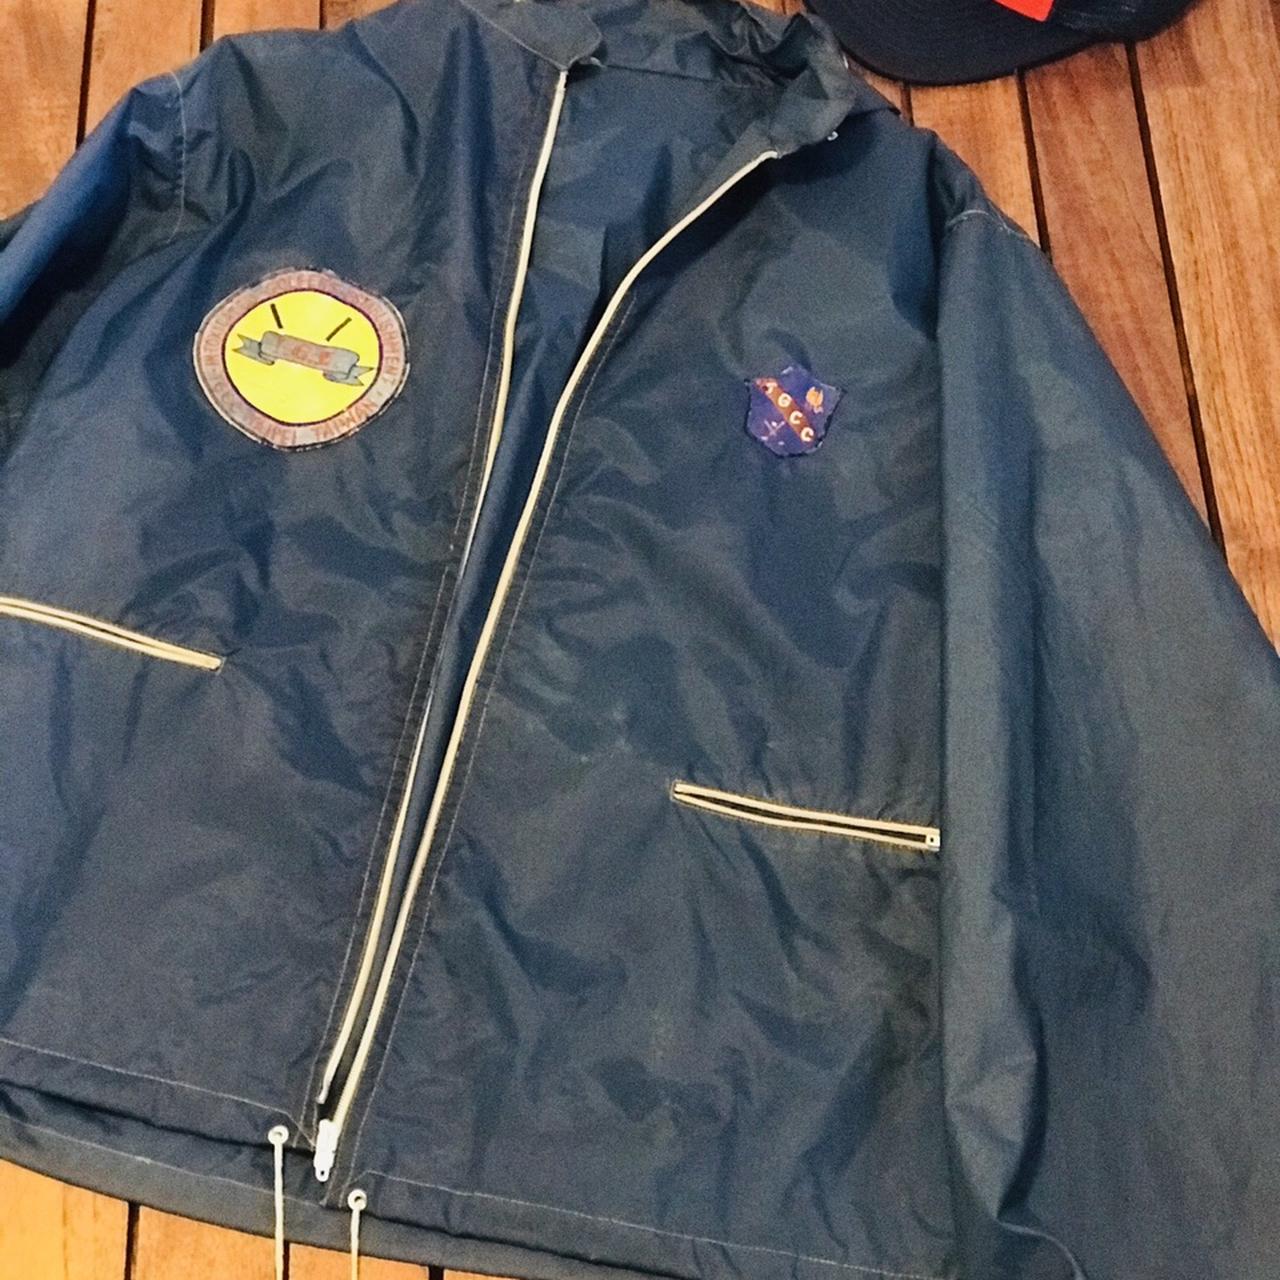 Product Image 2 - 1970’s wind breaker jacket, cap